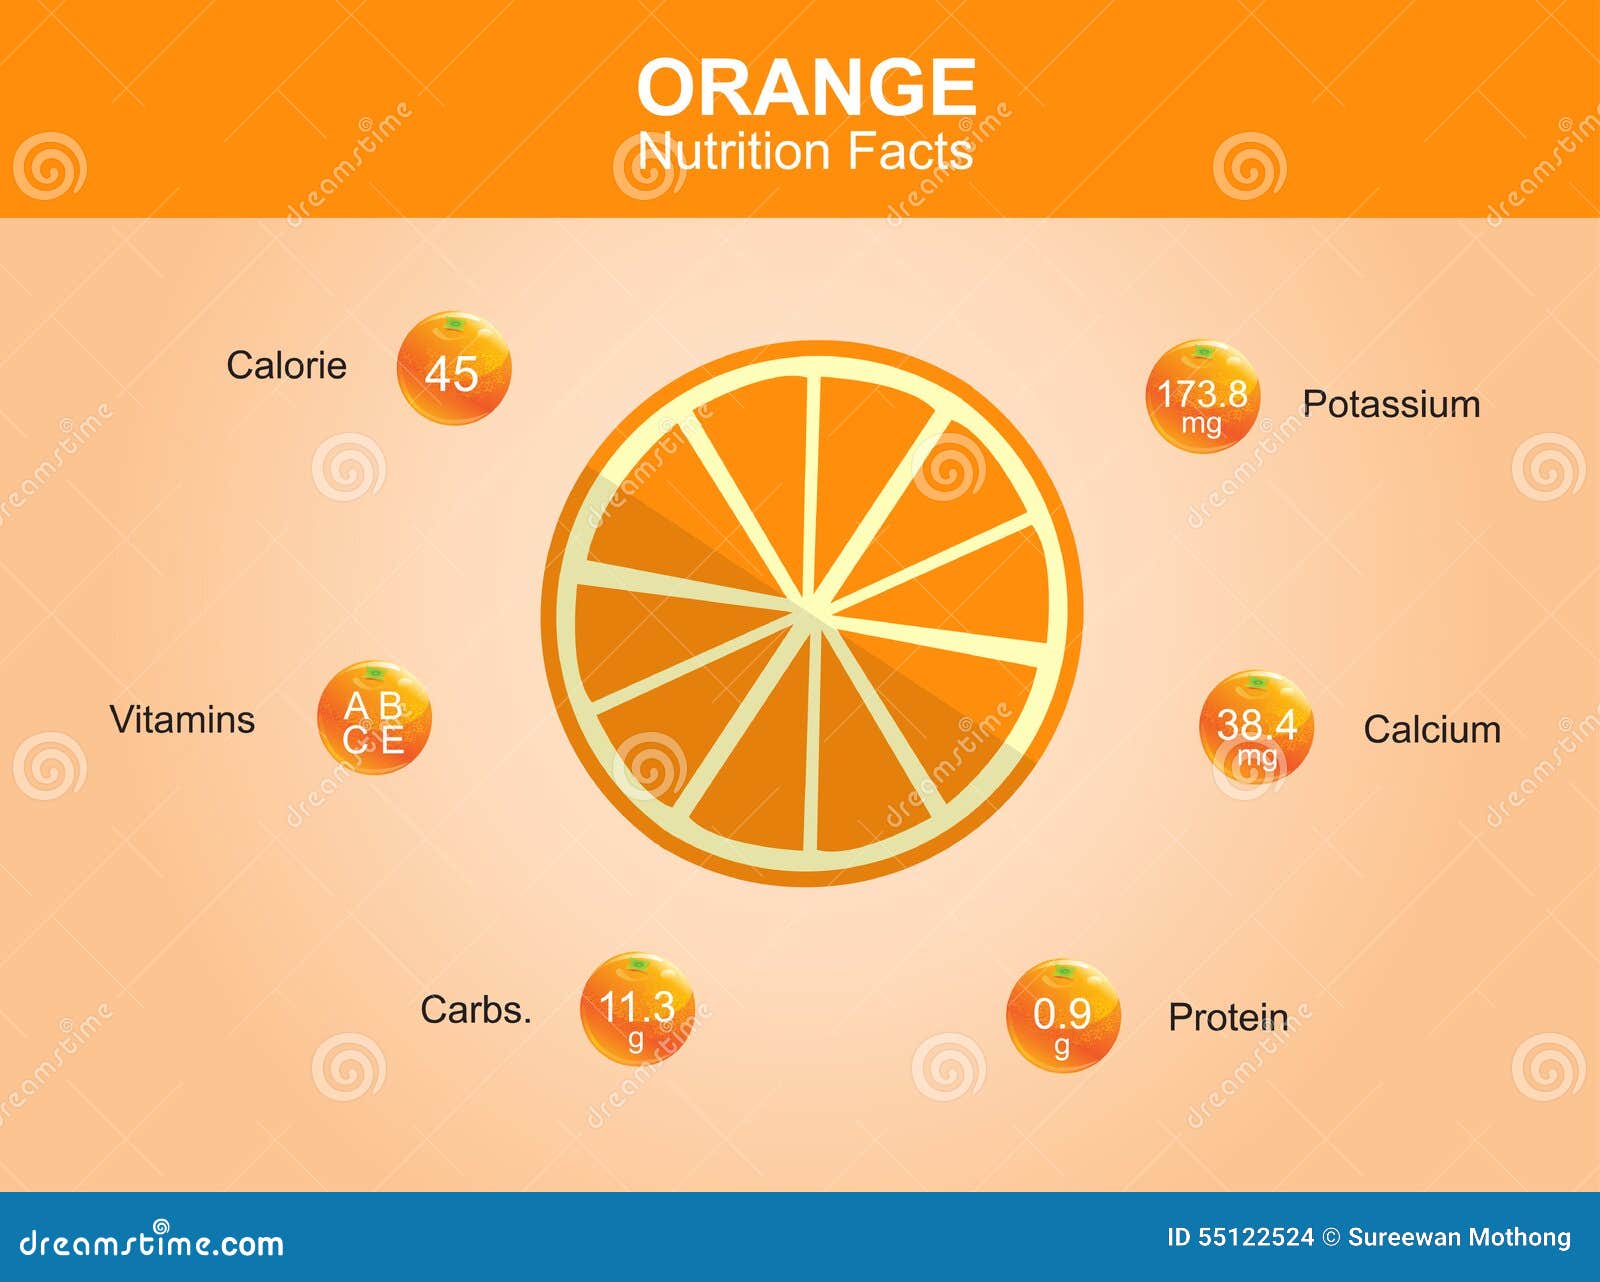 Orange Nutrition Facts Orange Fruit With Information Orange with regard to Amazing  nutrition facts orange intended for  Household